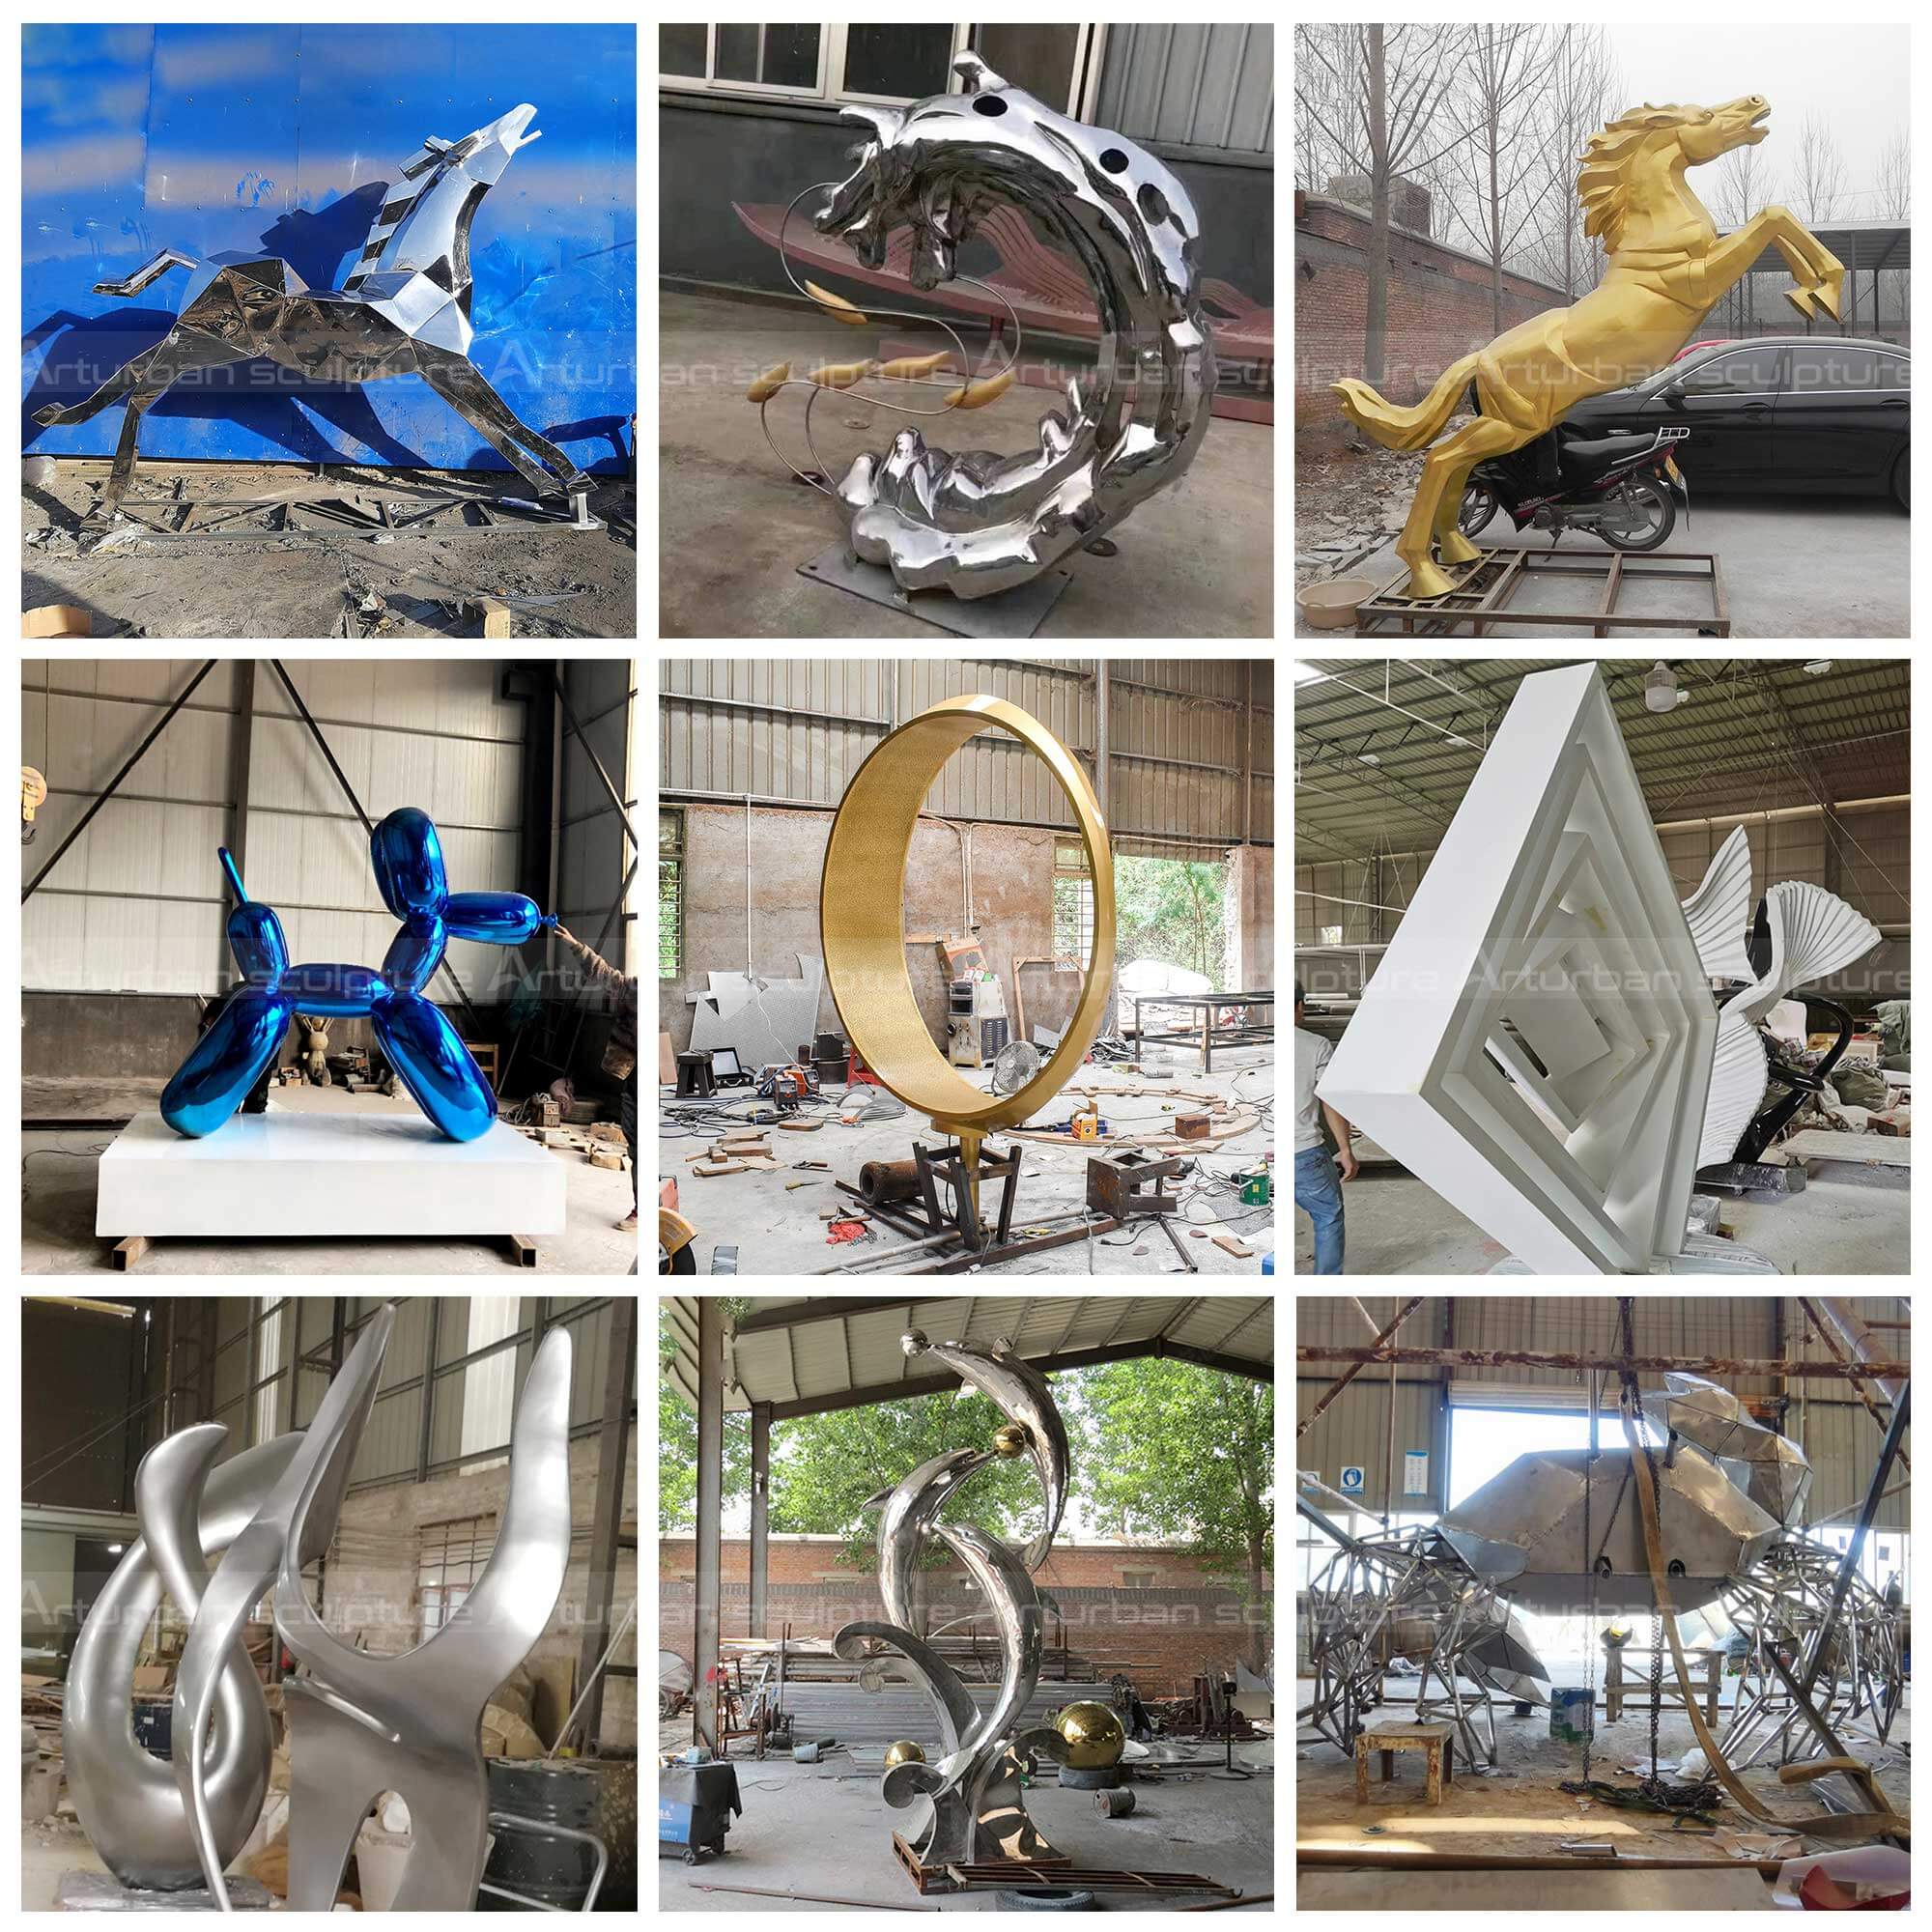 stainless steel sculpture